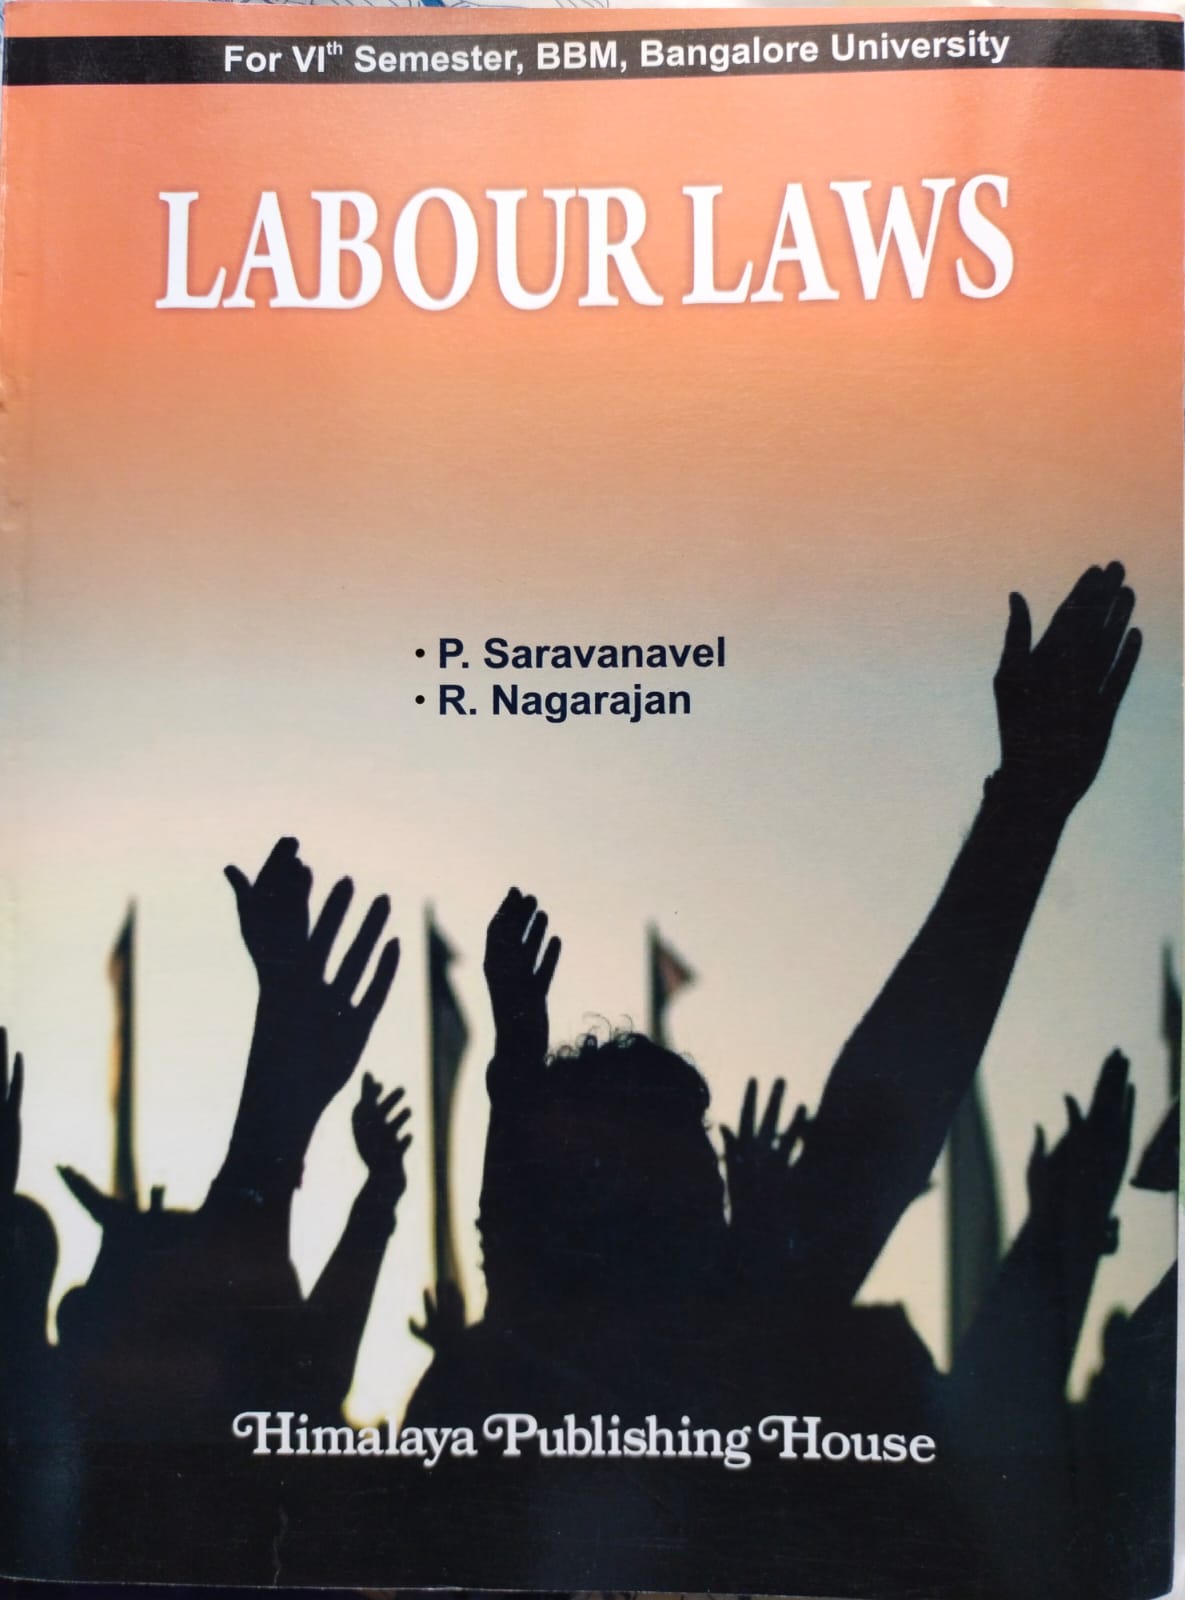 Labour Laws by P.Saravanavel and R.Nagarajan